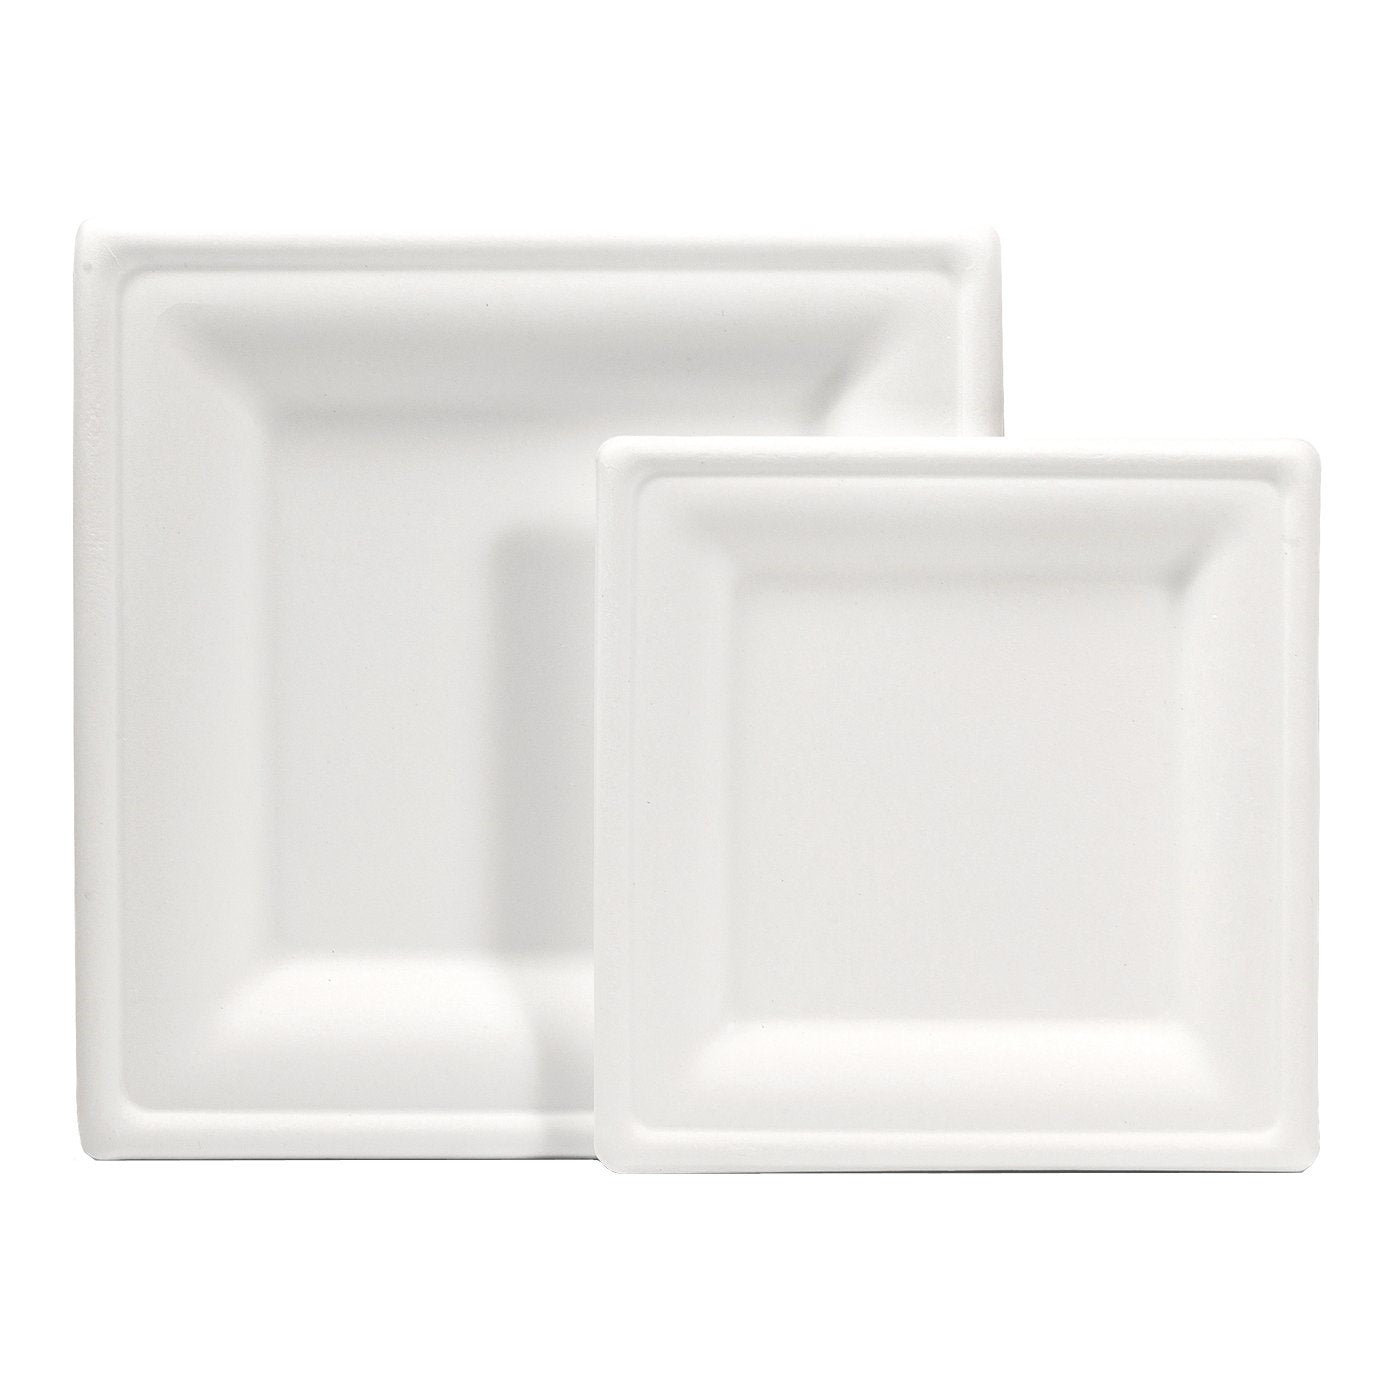 Bagasse Fiber Plates - Square